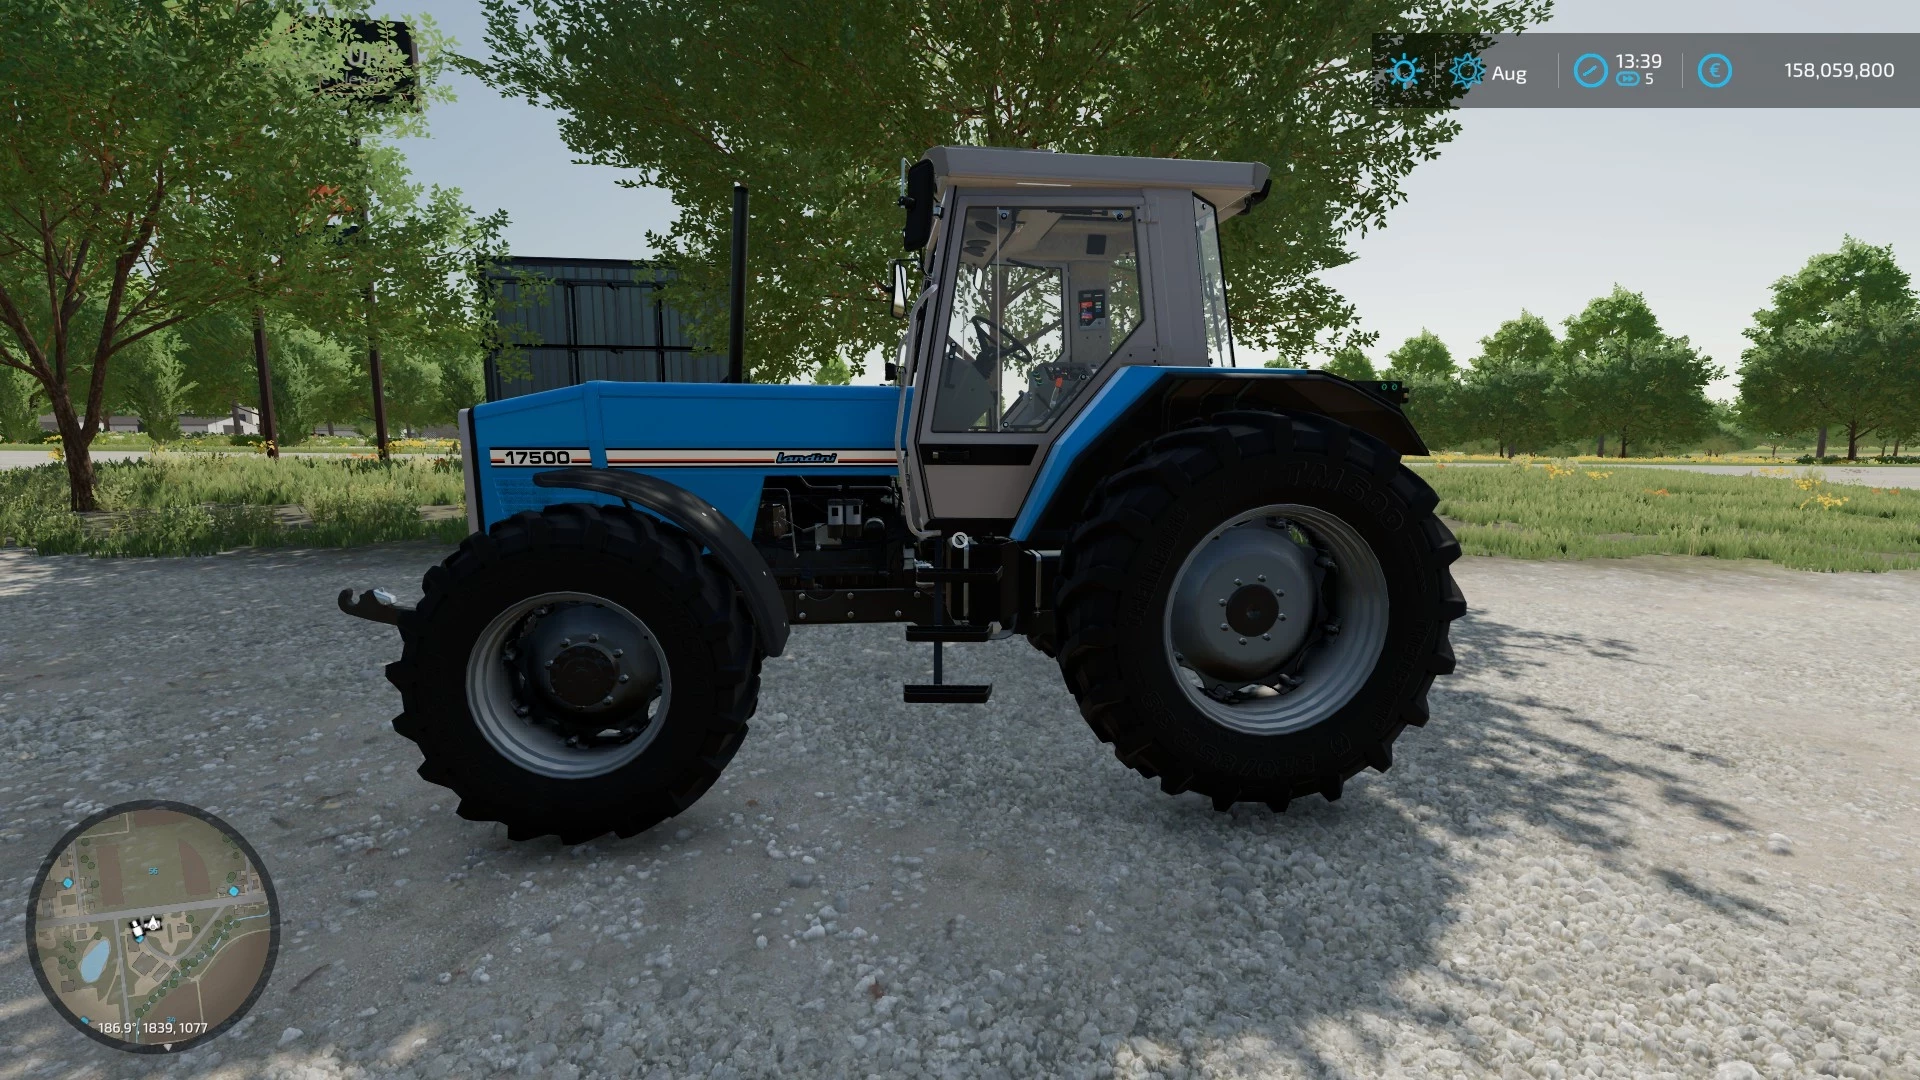 Landini enters the world of Farming Simulator 22 - Landini